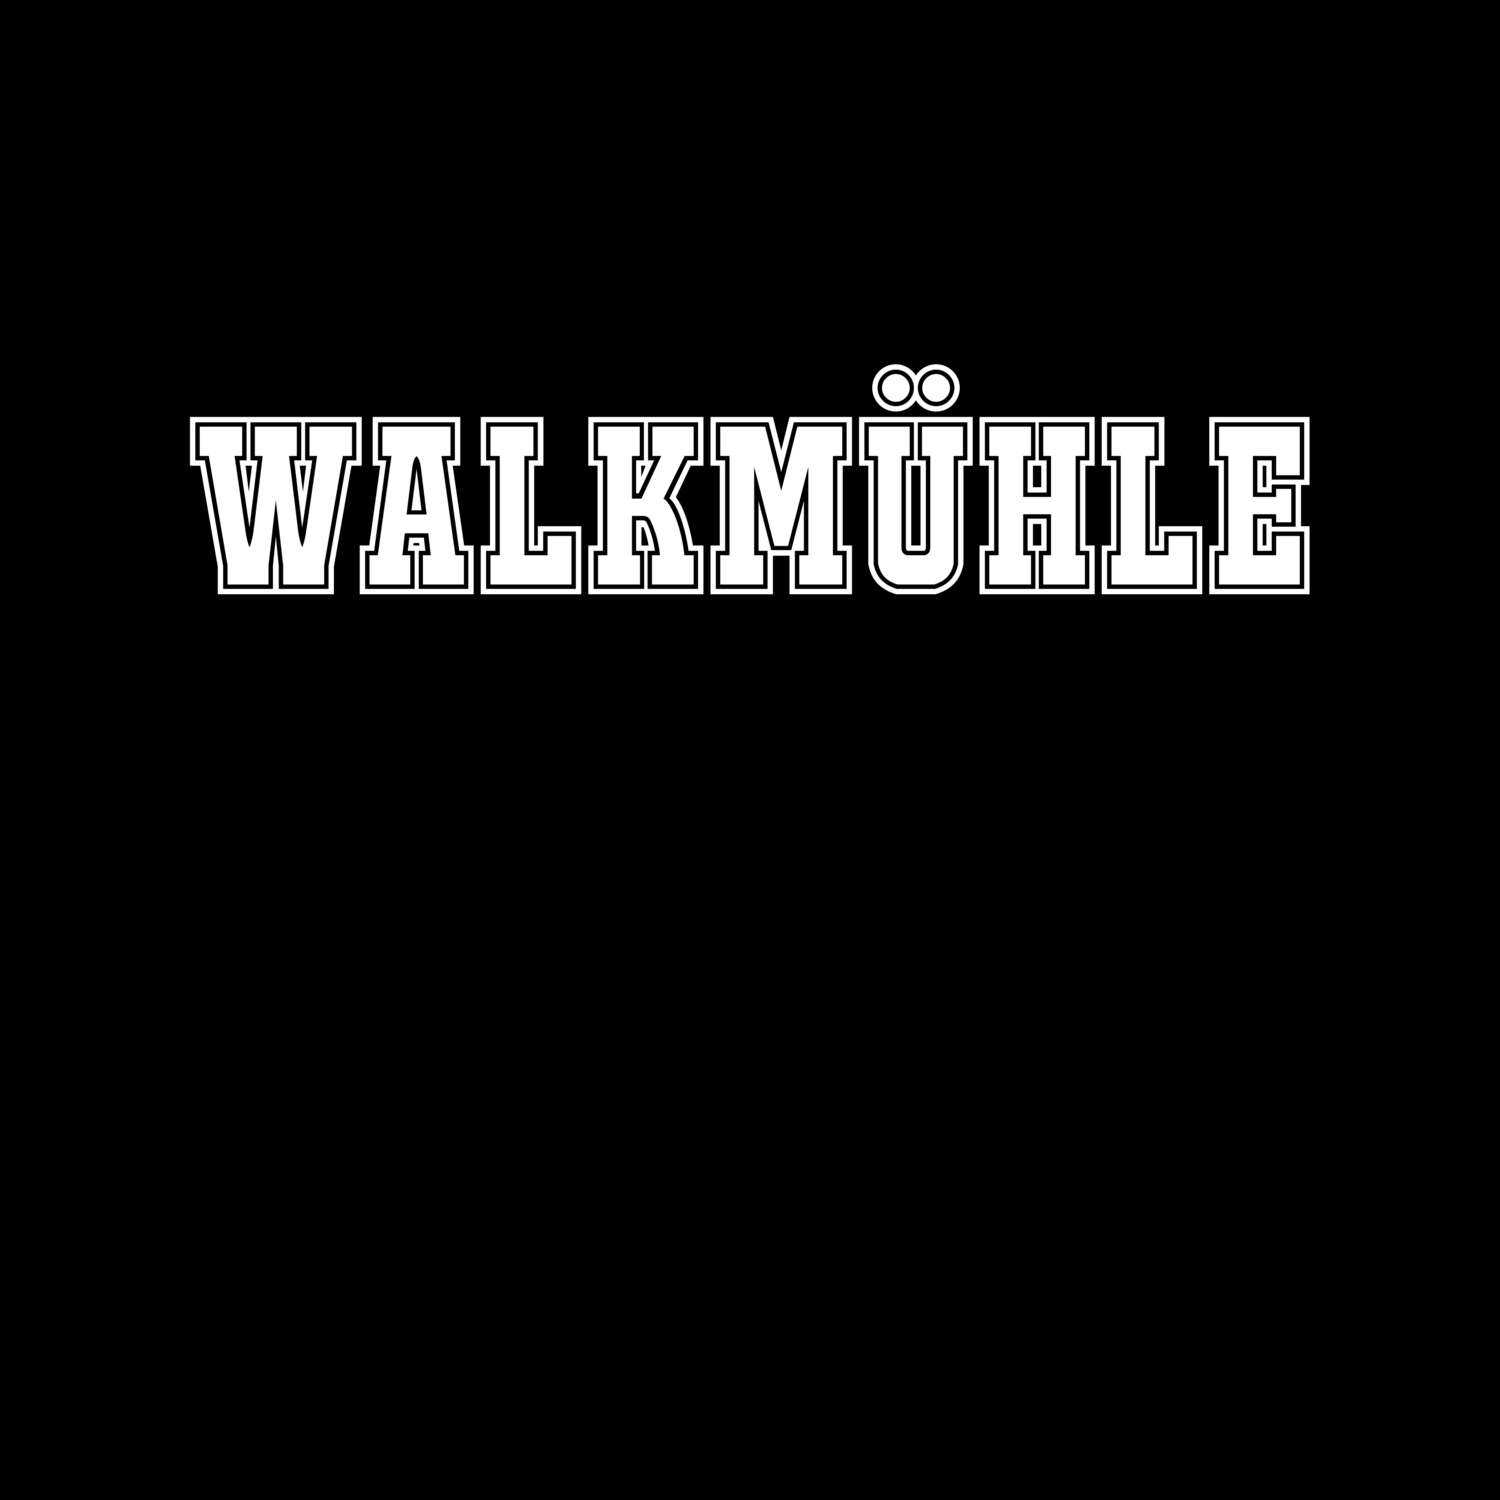 Walkmühle T-Shirt »Classic«